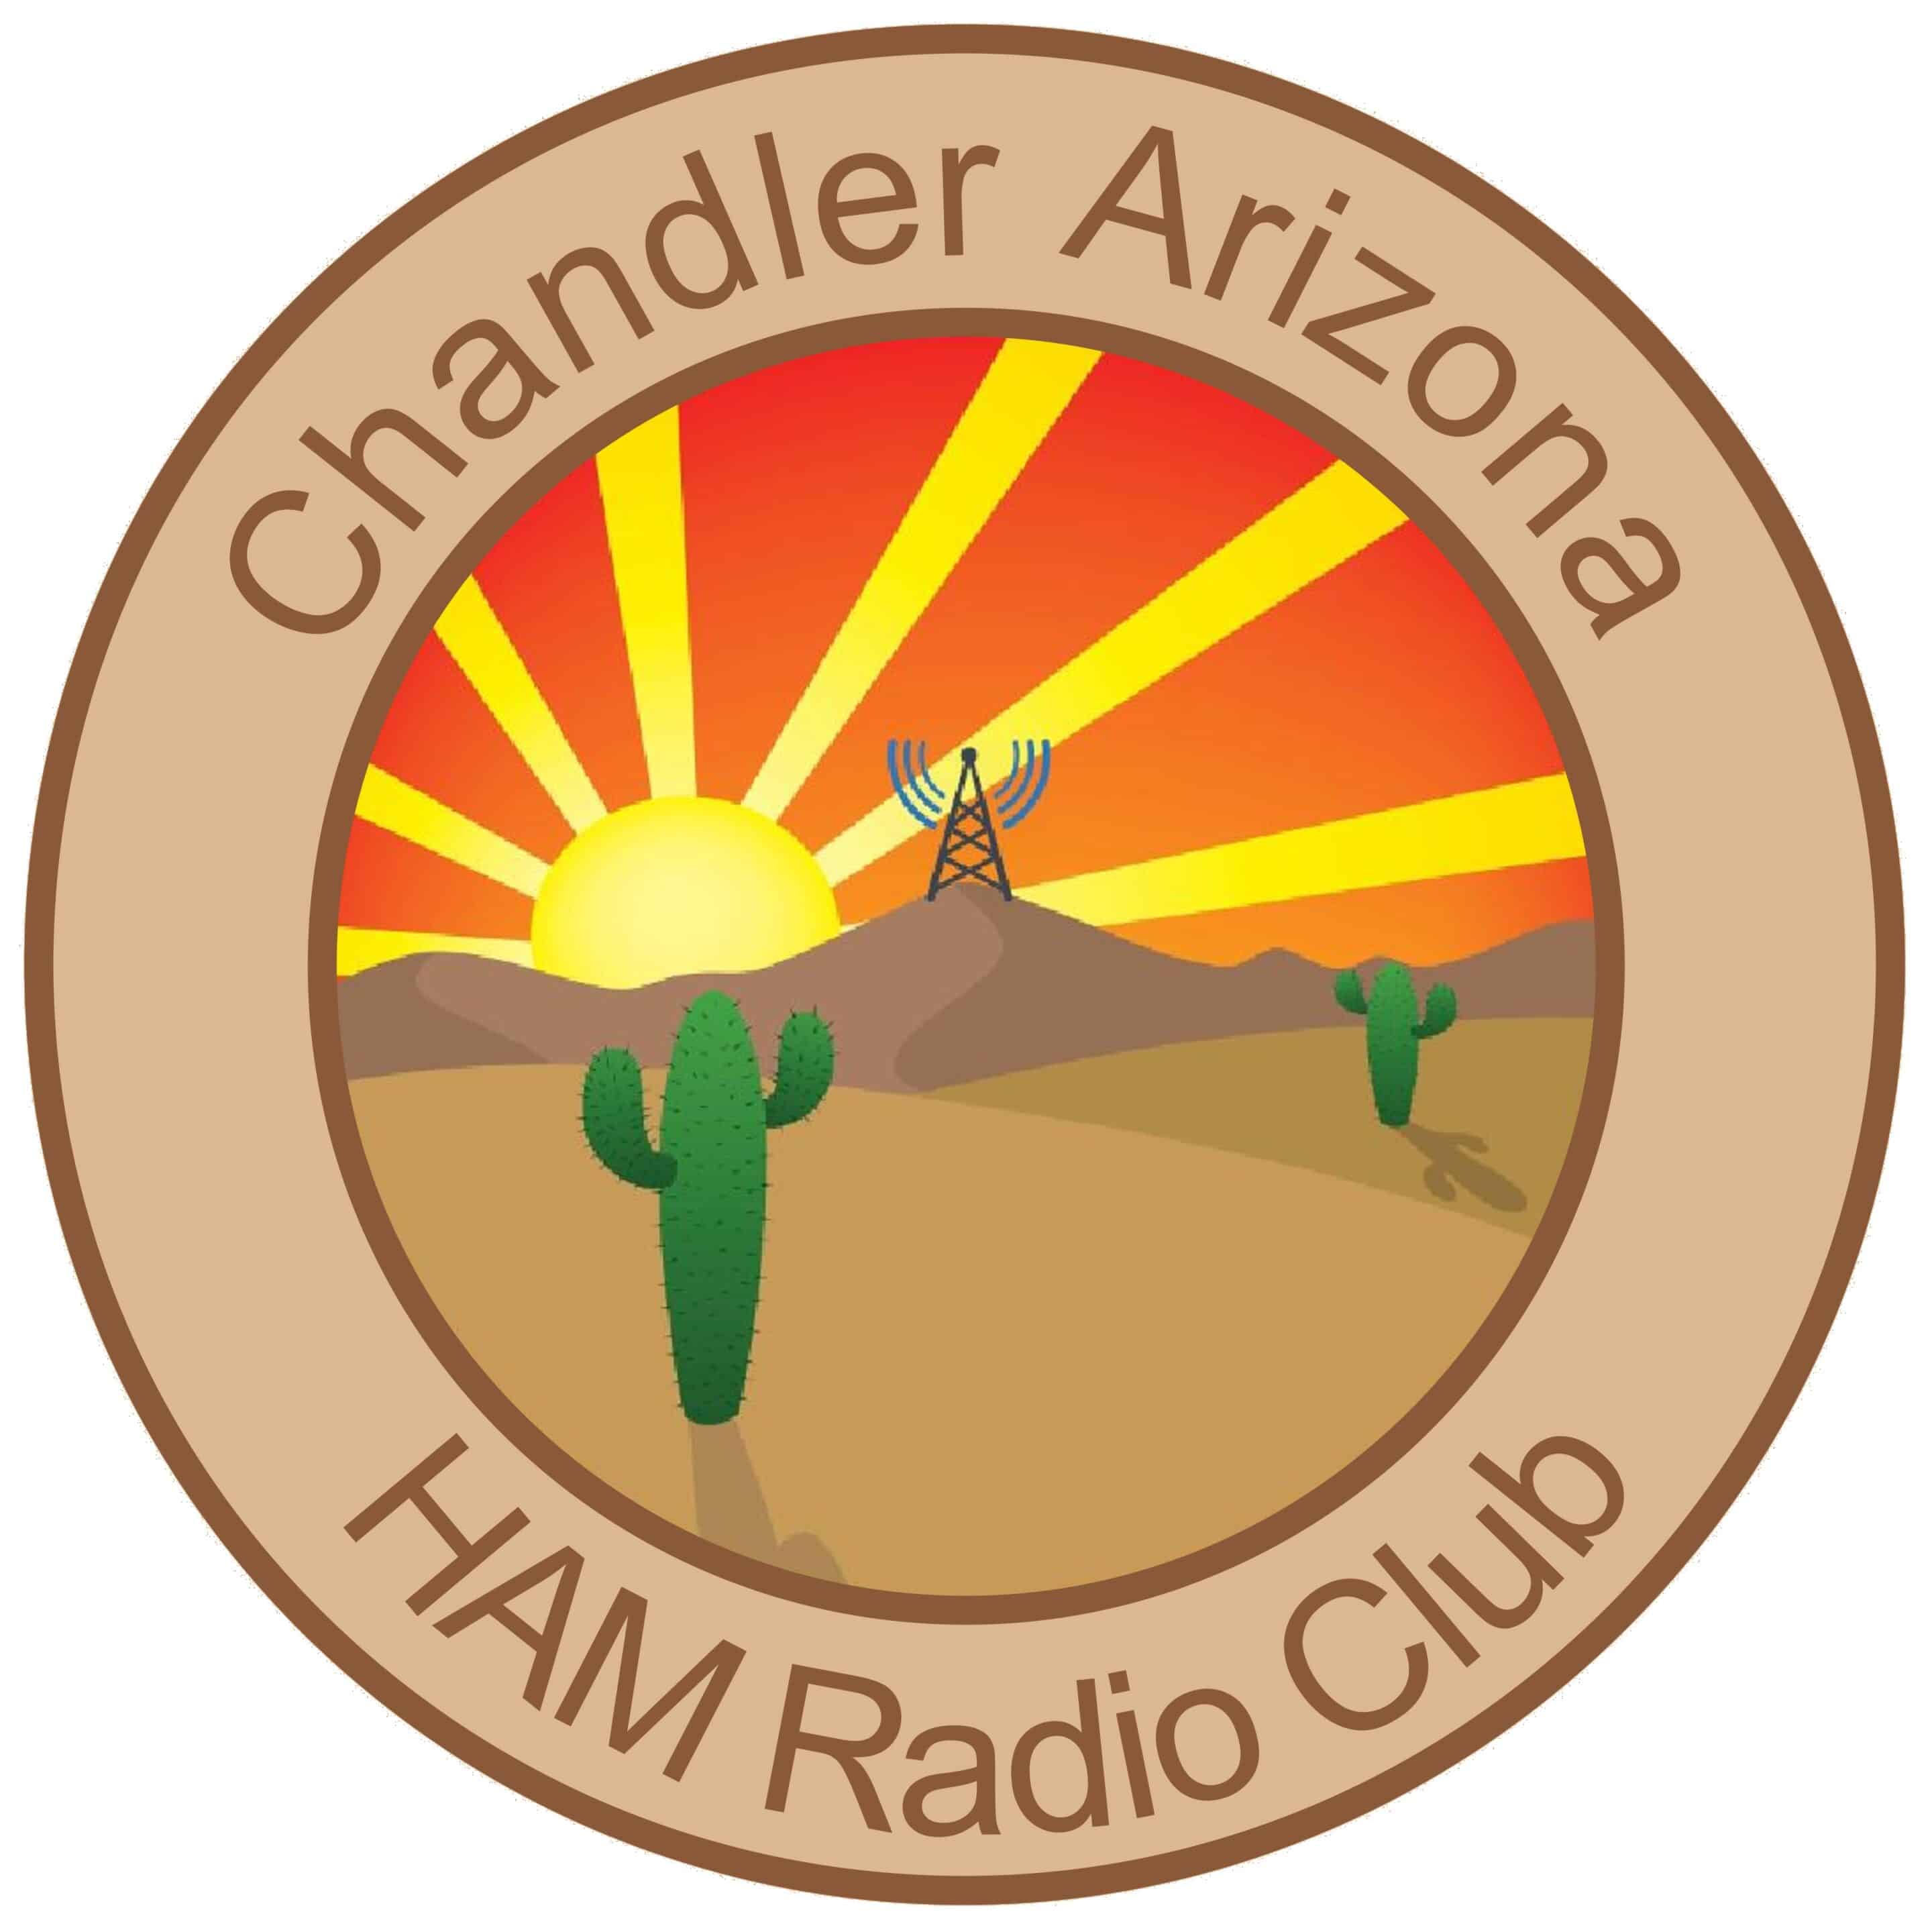 Chandler Ham Radio Club